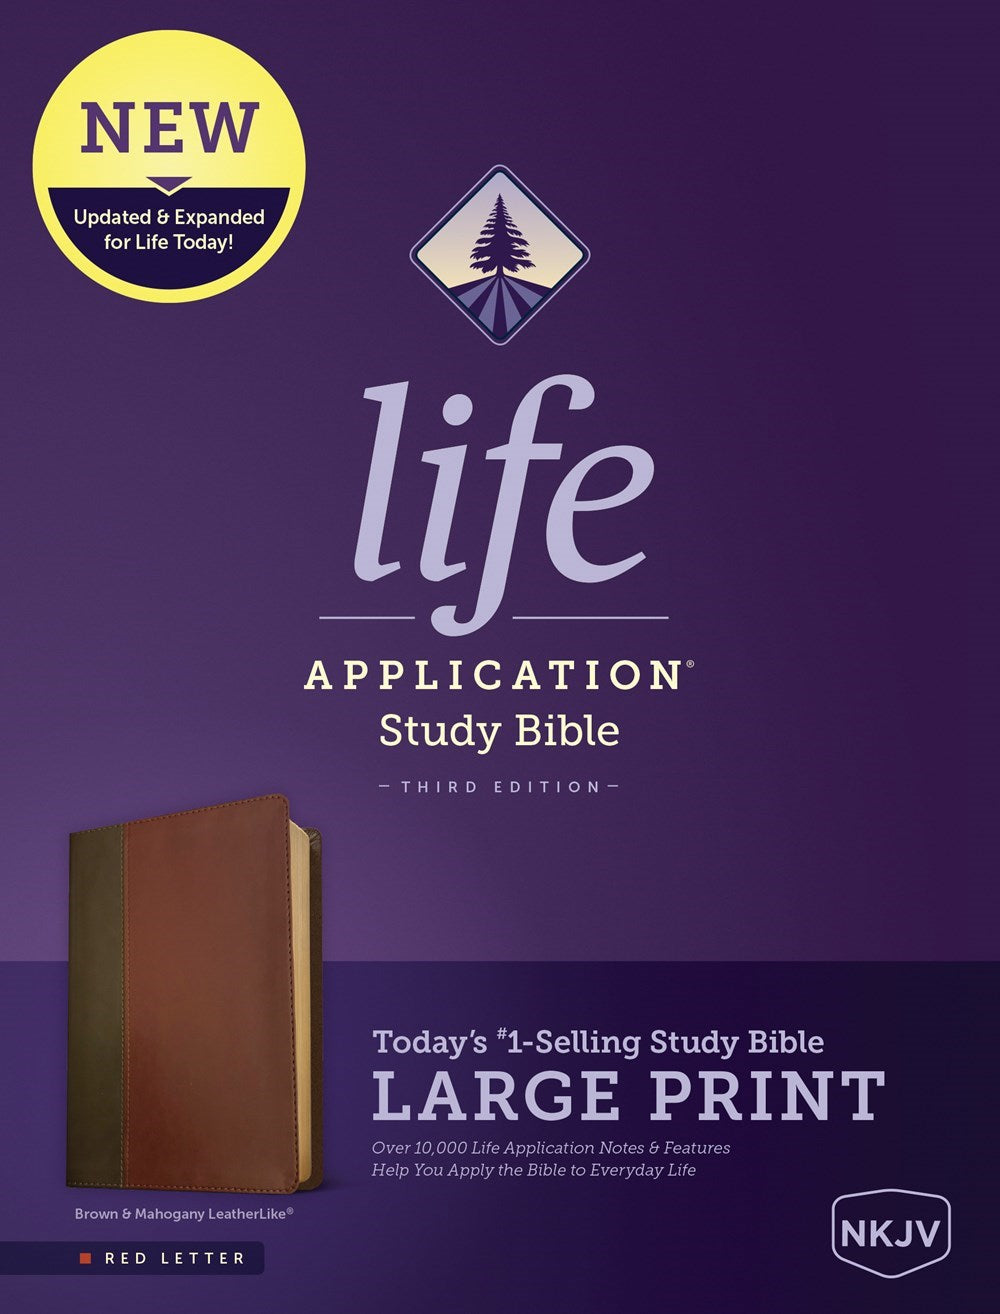 NKJV Life Application Study Bible/Large Print (Third Edition)-Brown/Mahogany LeatherLike